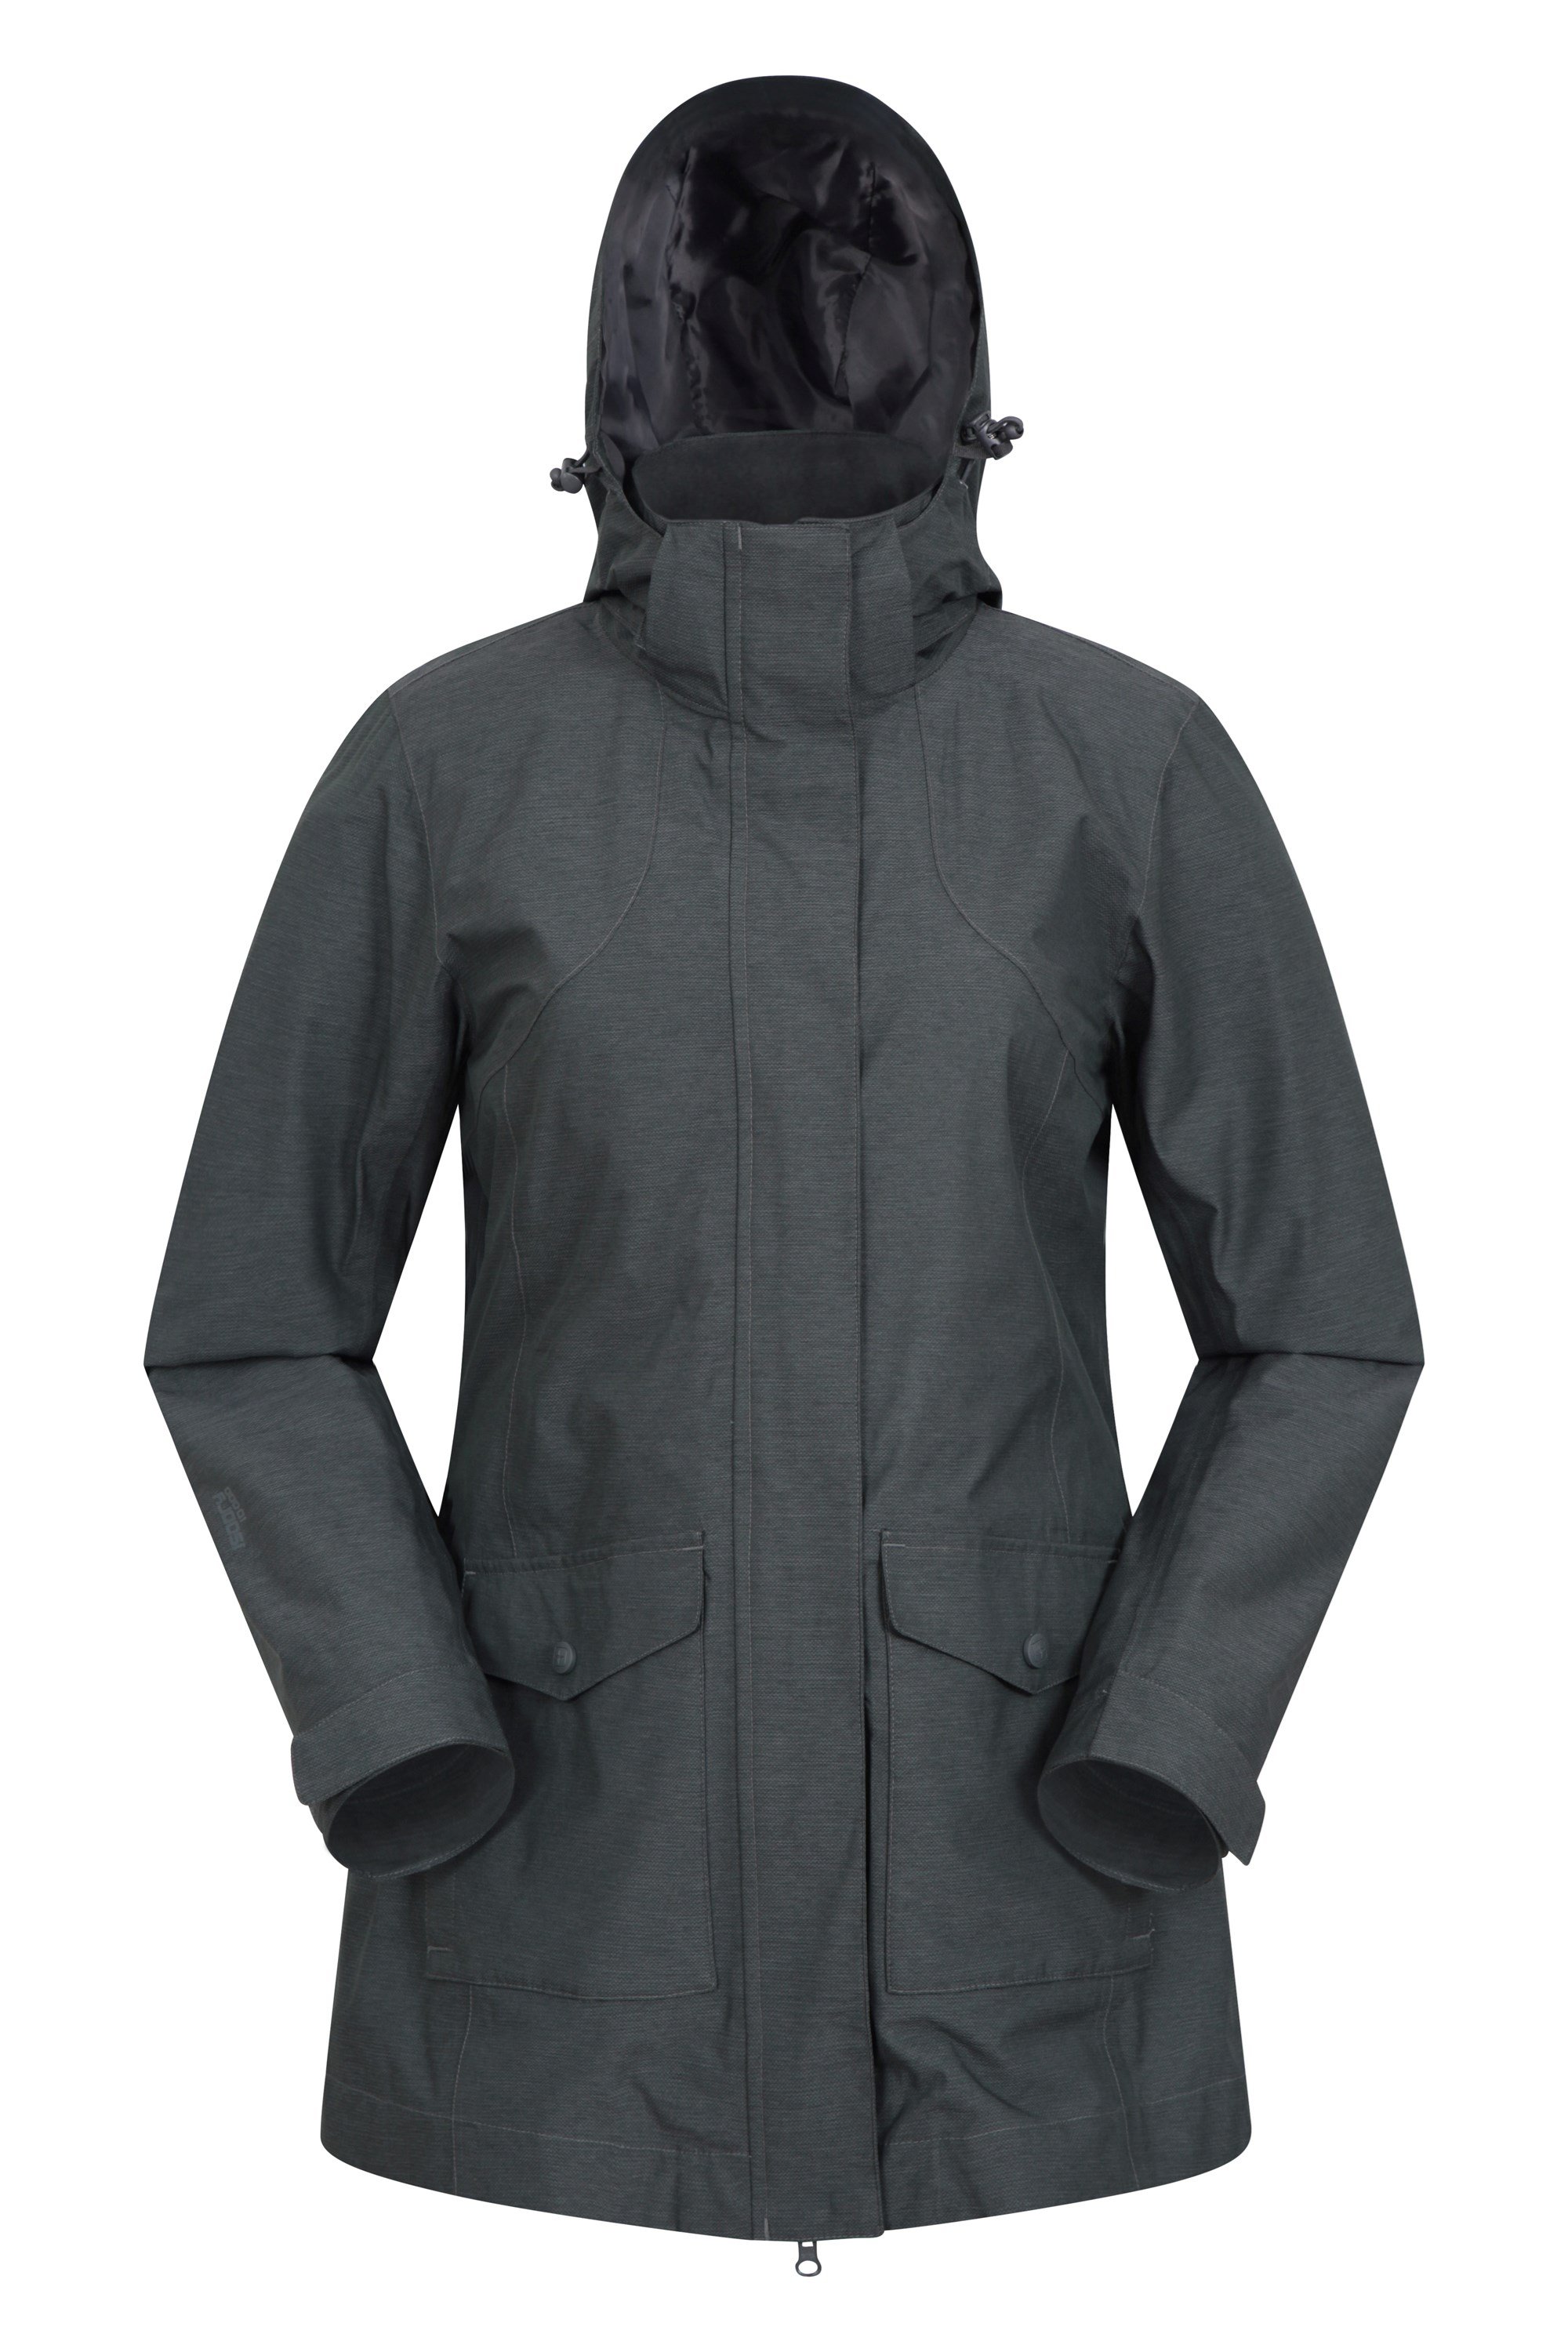 Mountain Warehouse Shore II Womens Waterproof Jacket - Grey | Size 10